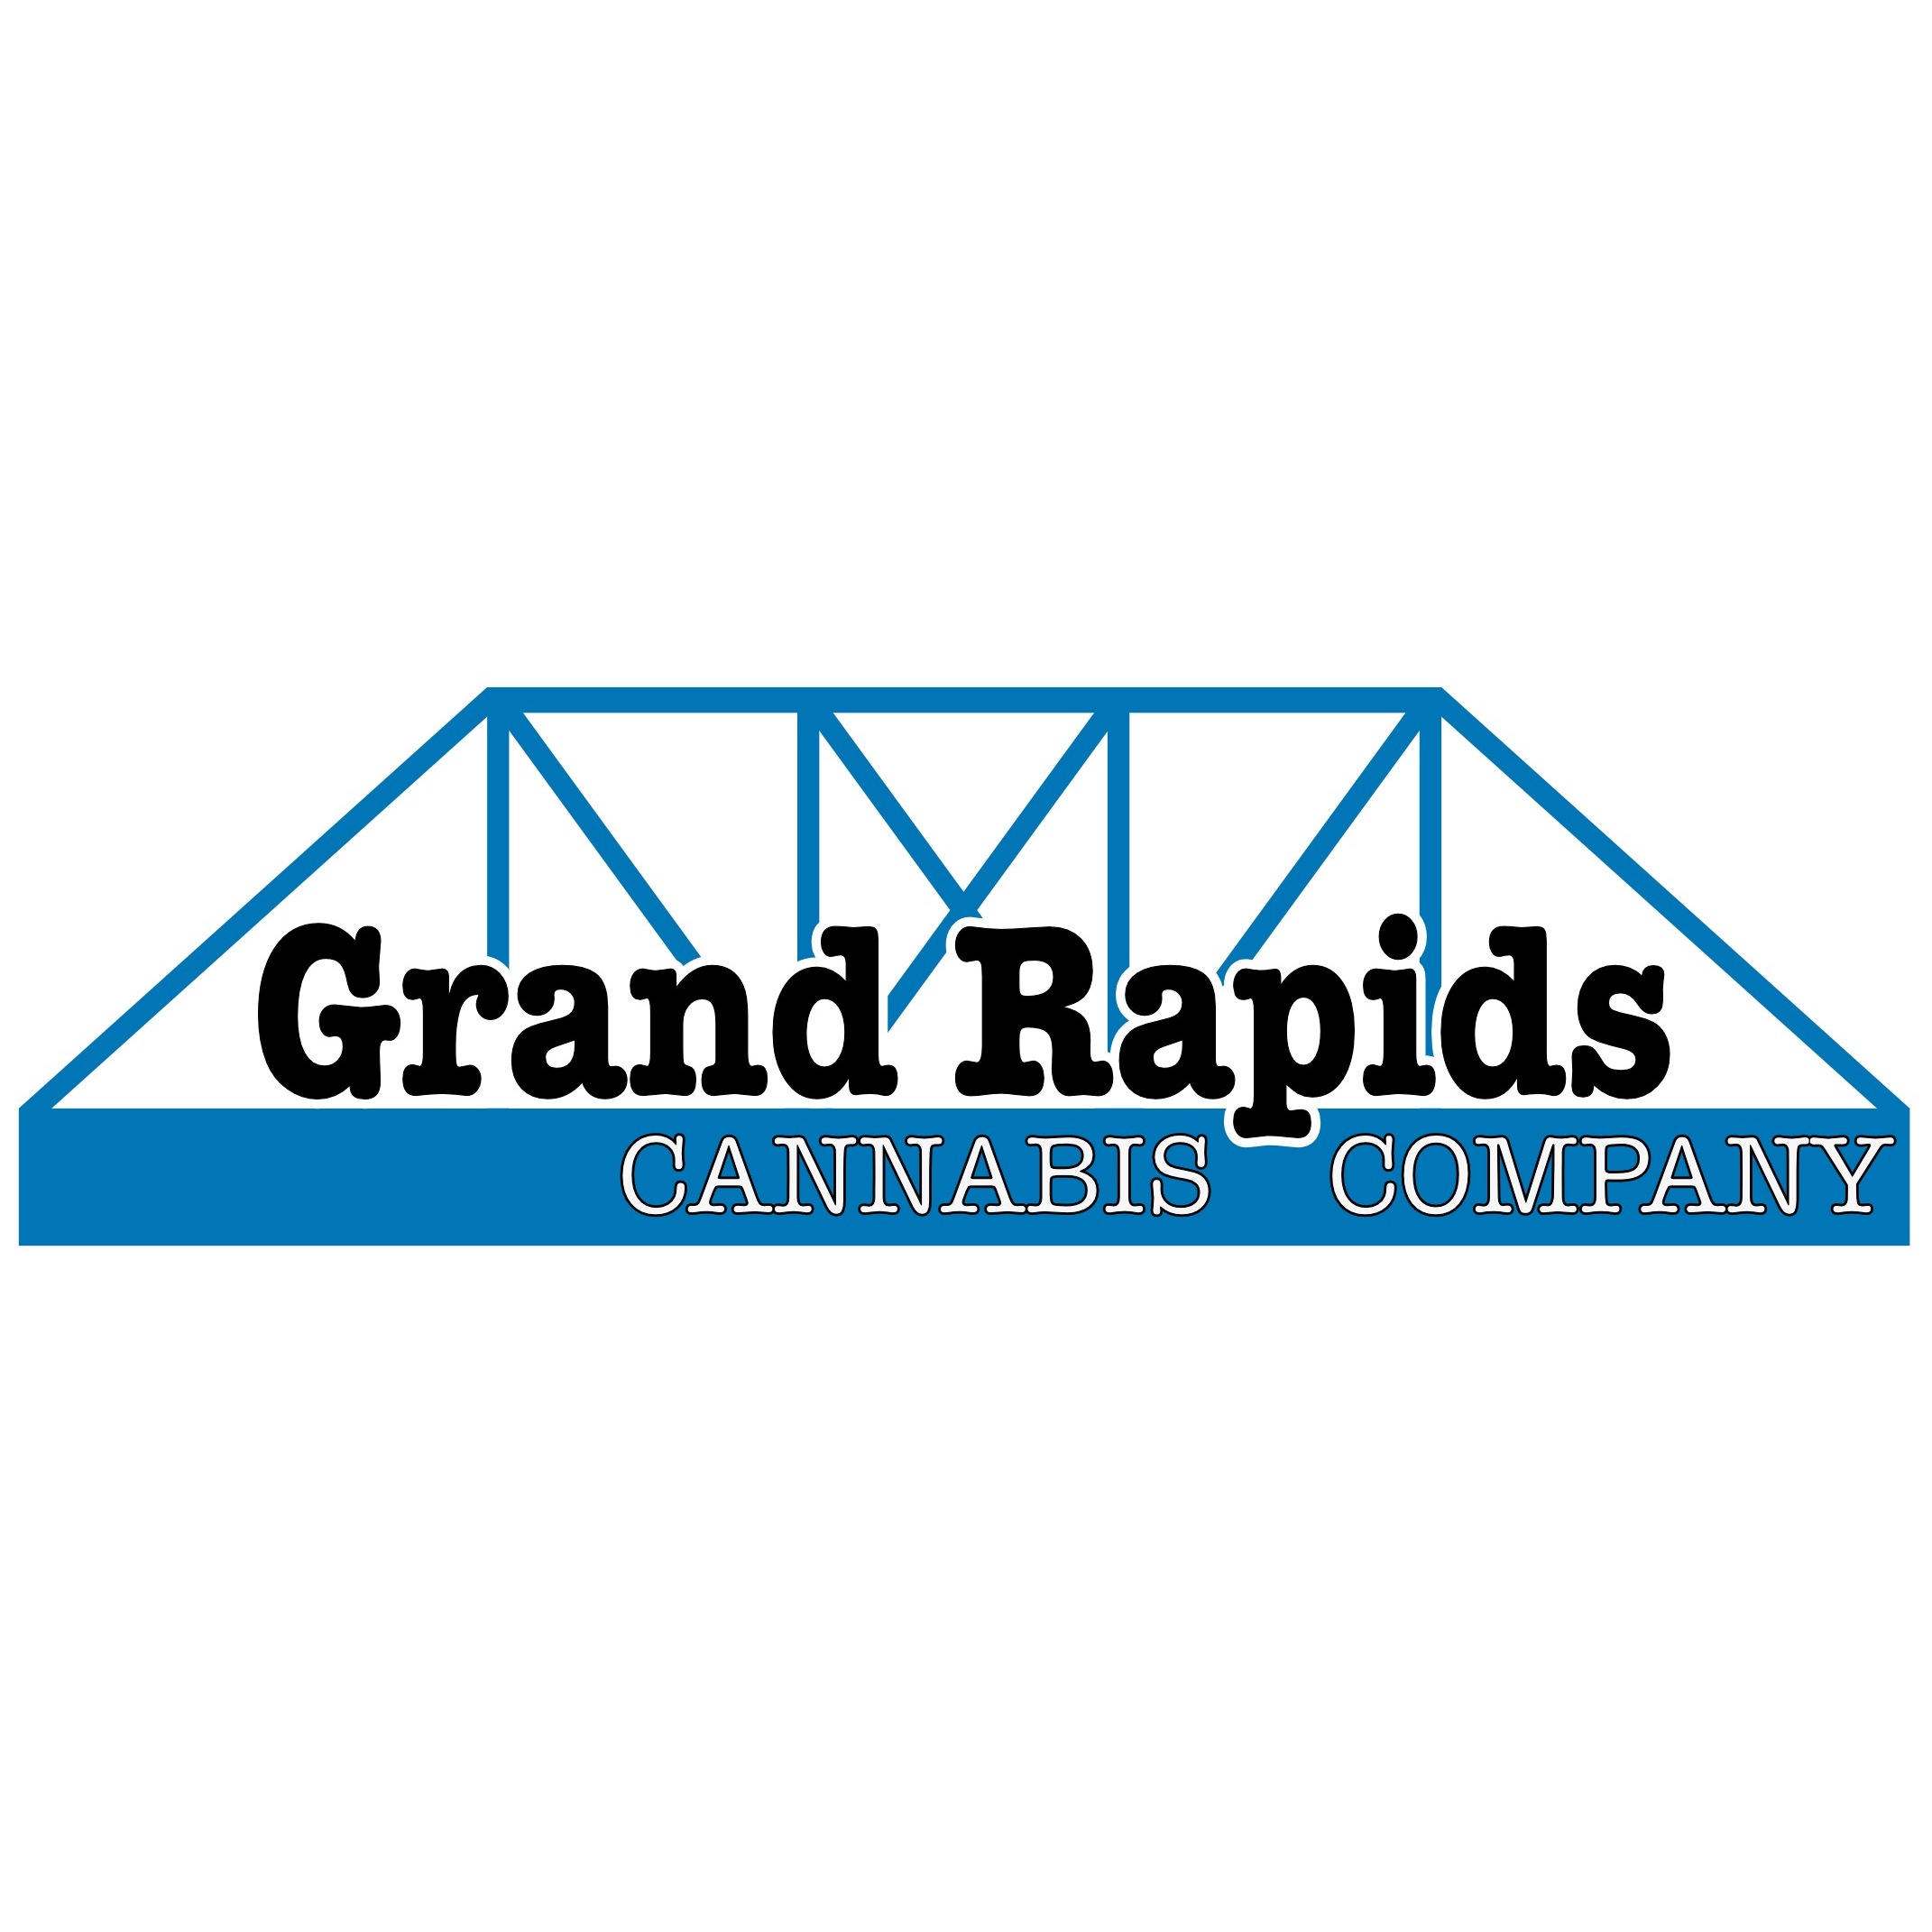 Grand Rapids Cannabis Company